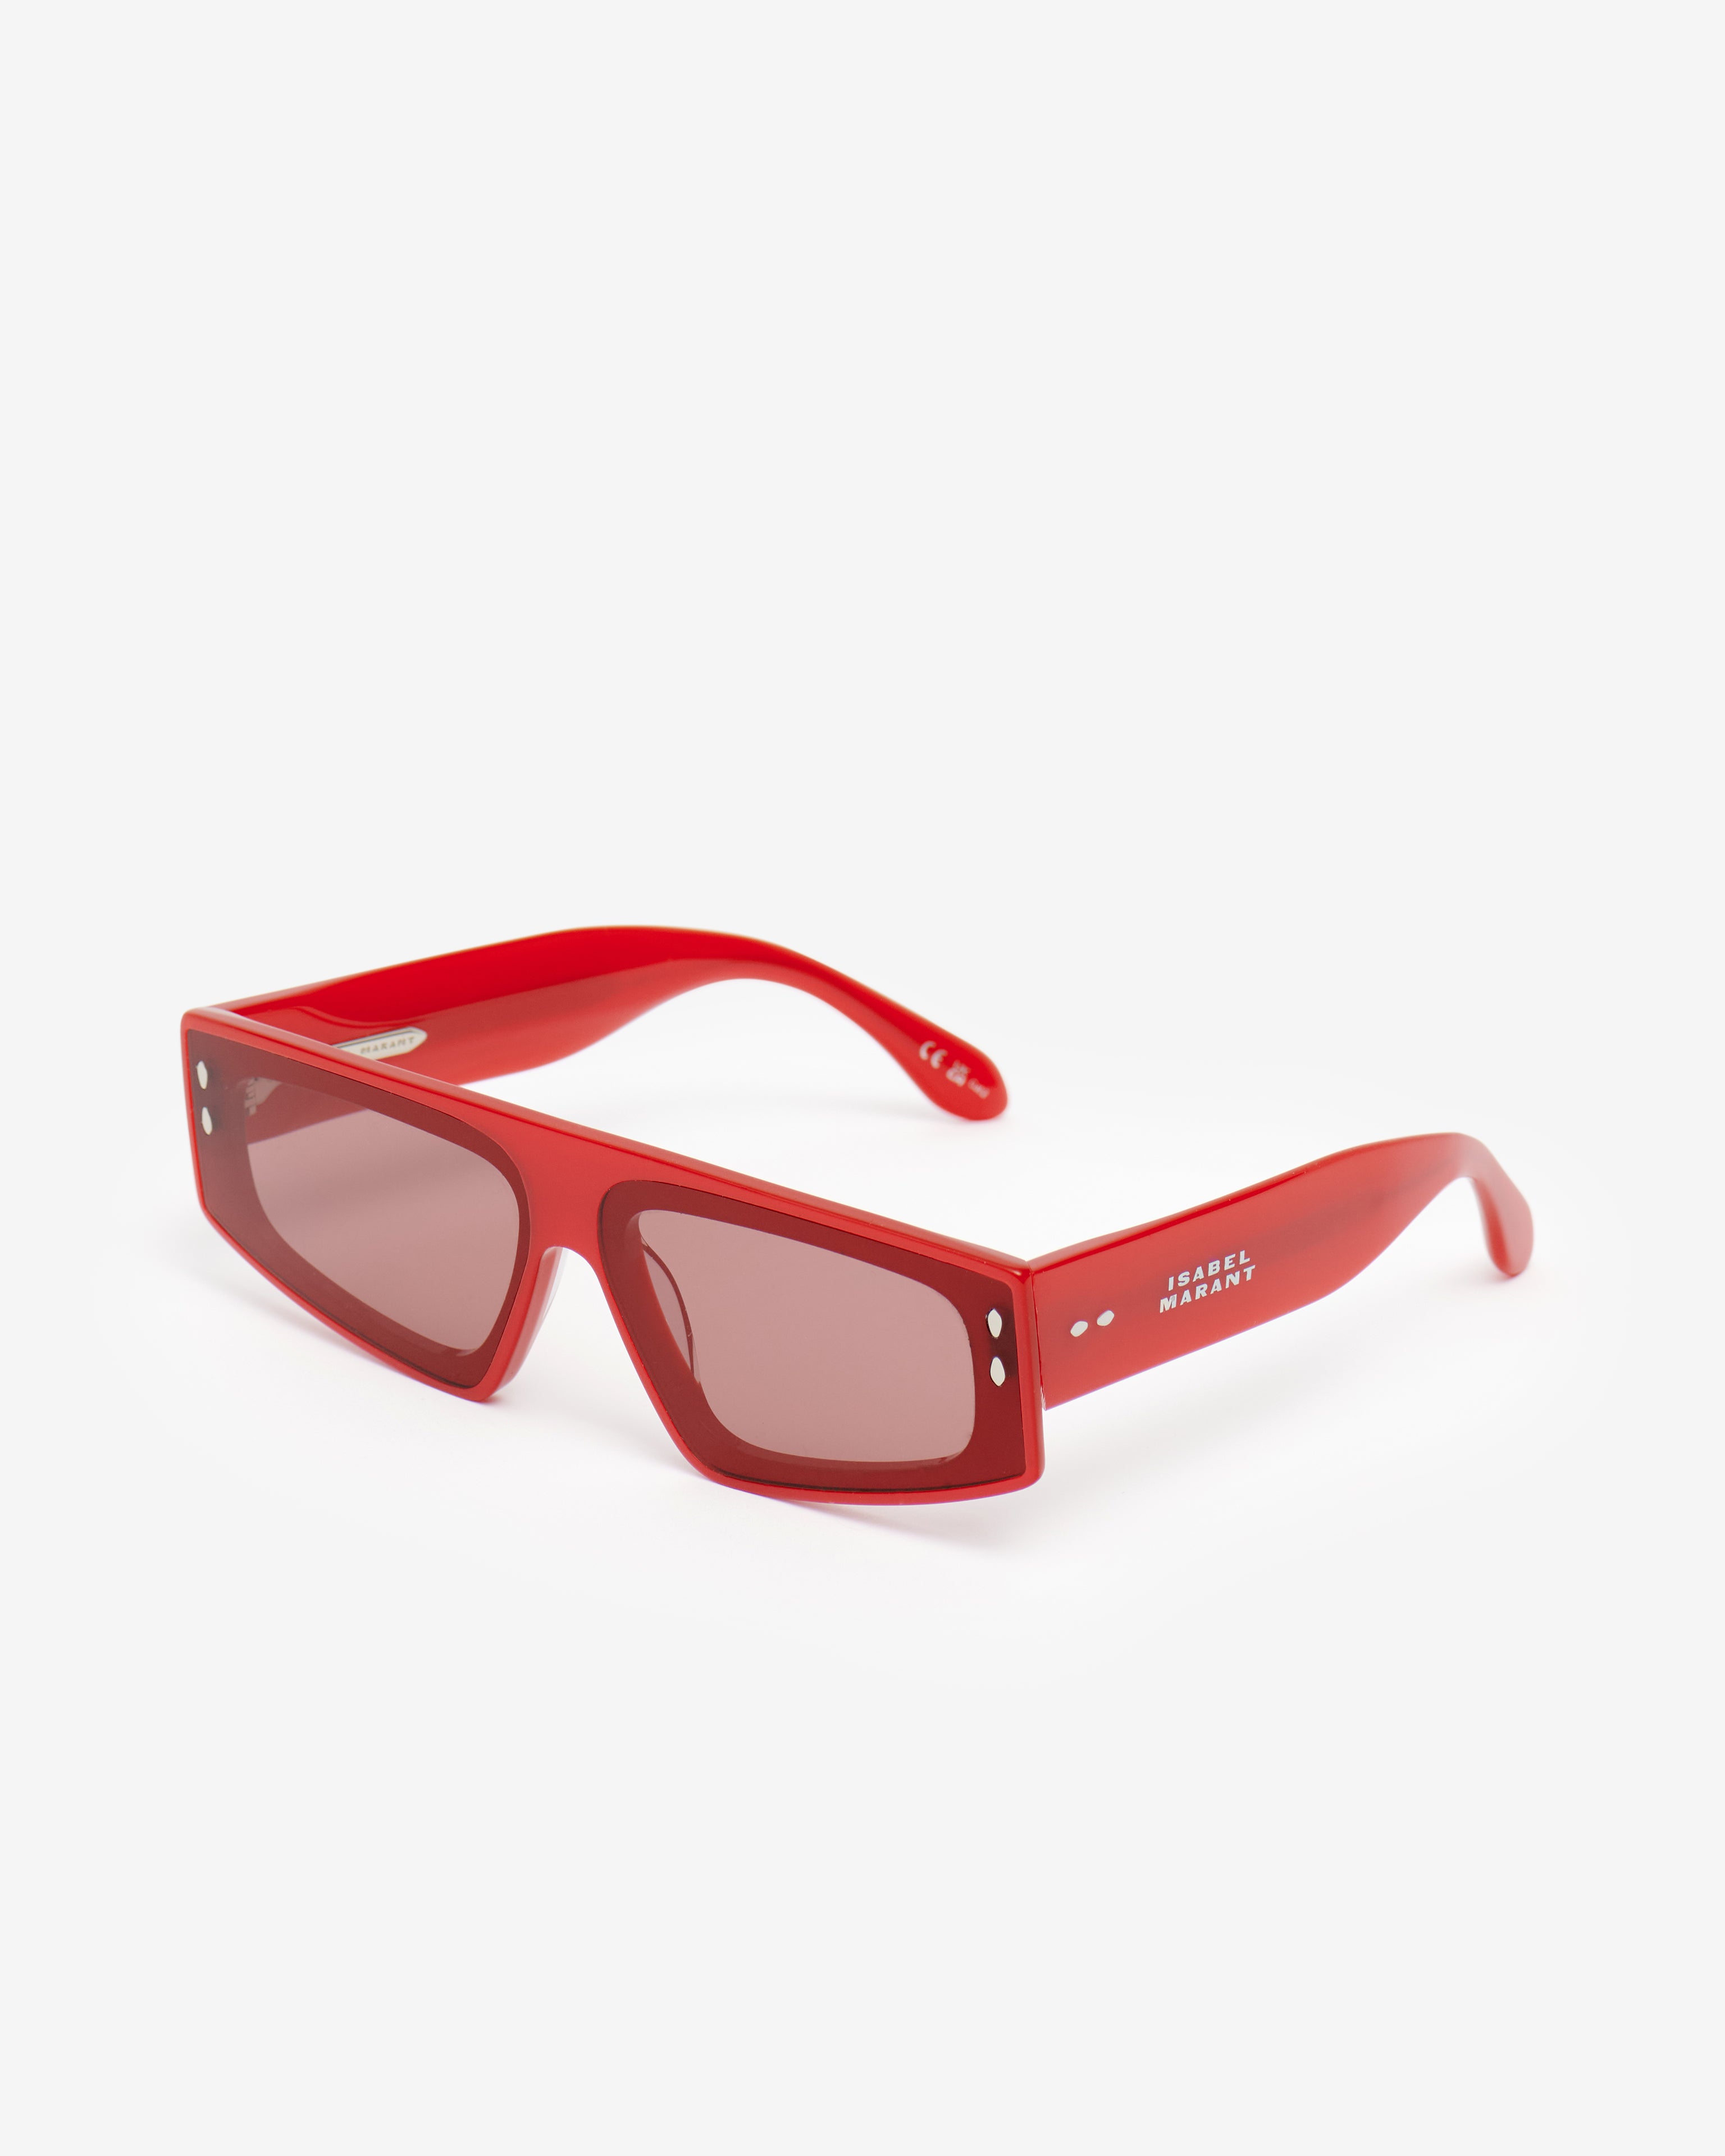 Zoomy sunglasses Woman Pearled red-burgundy 1